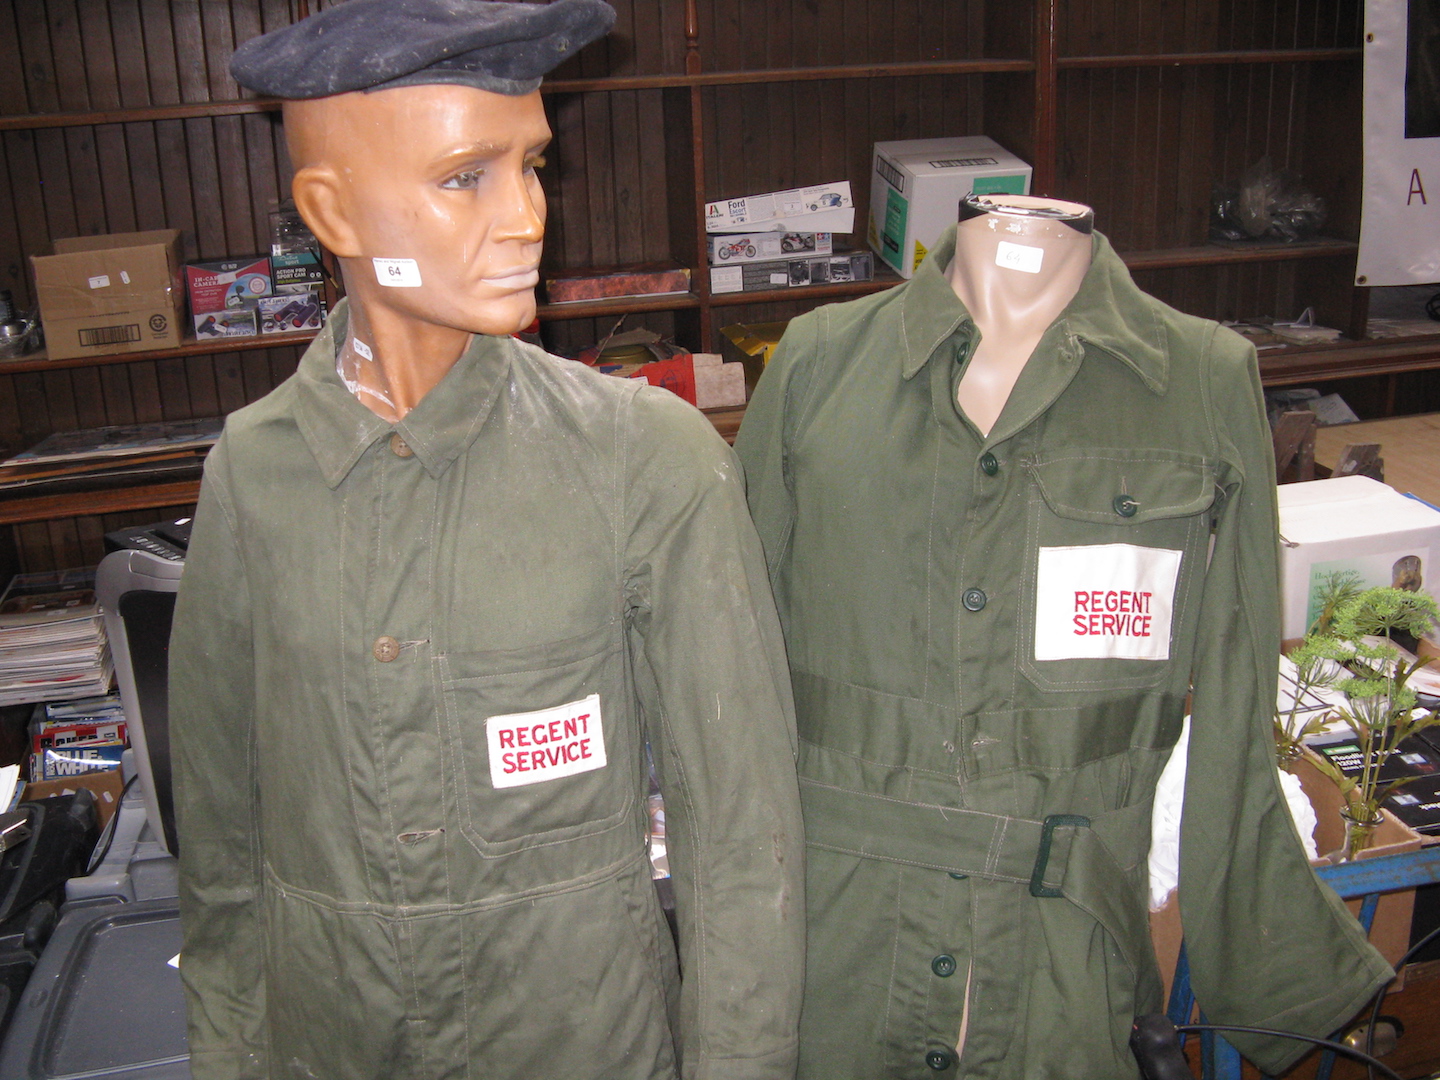 2 tailors dummies wearing overalls